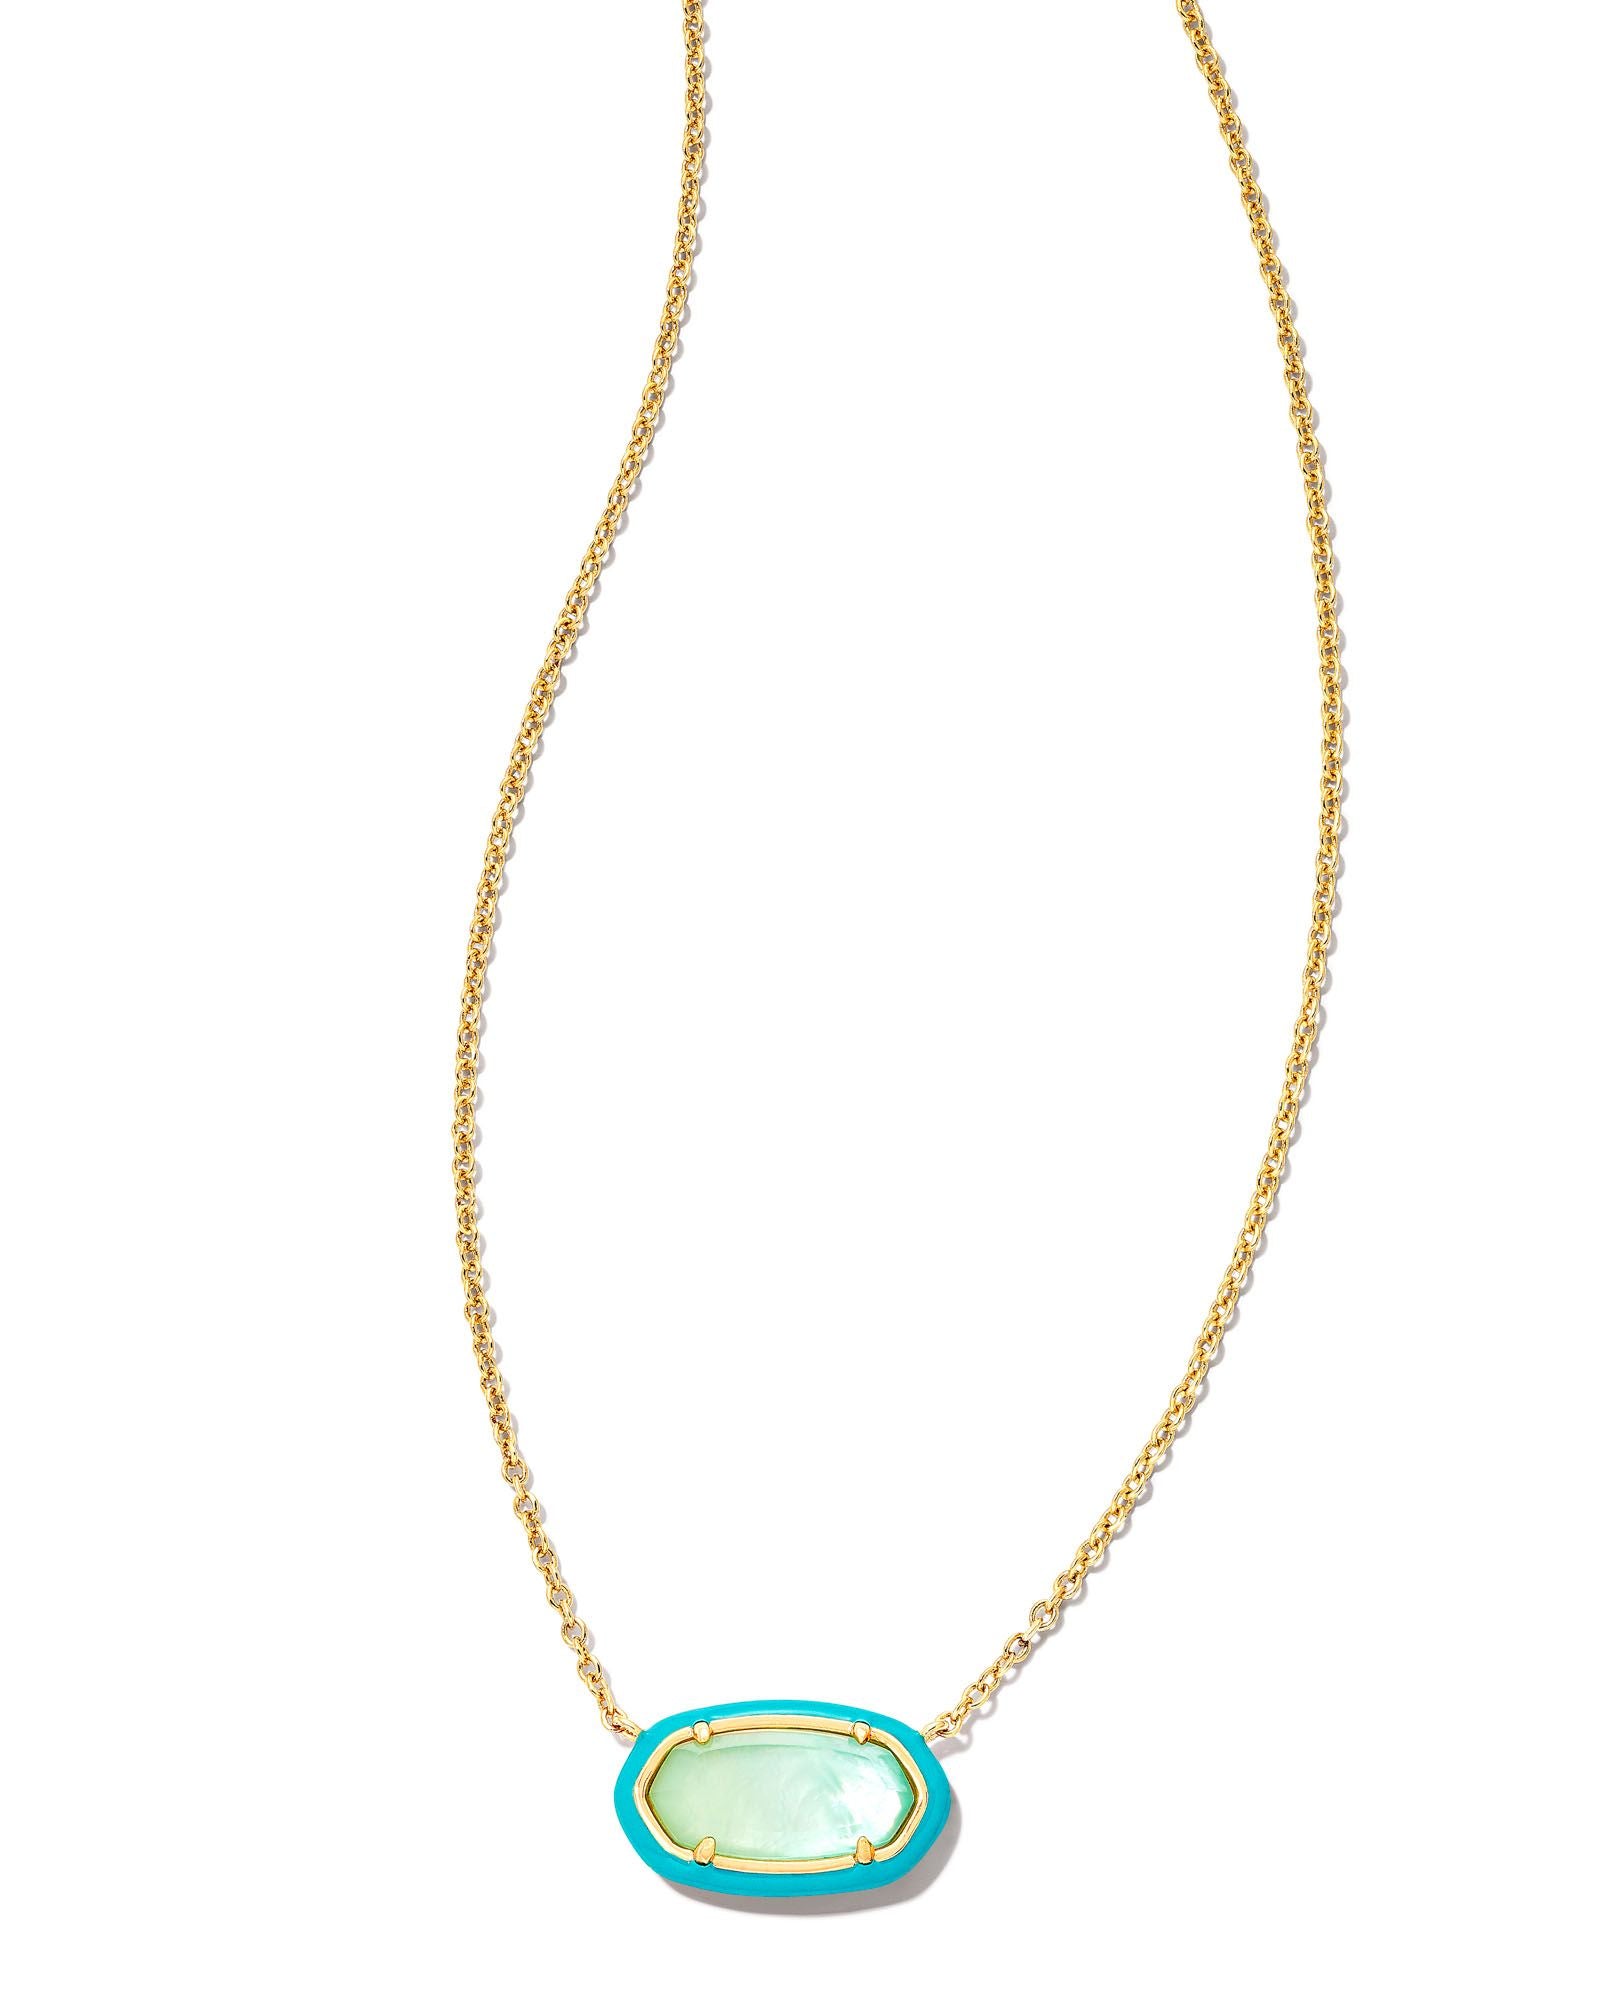 A Elisa Enamel Frame Short Pendant Necklace in color Sea Green. From Kendra Scott.